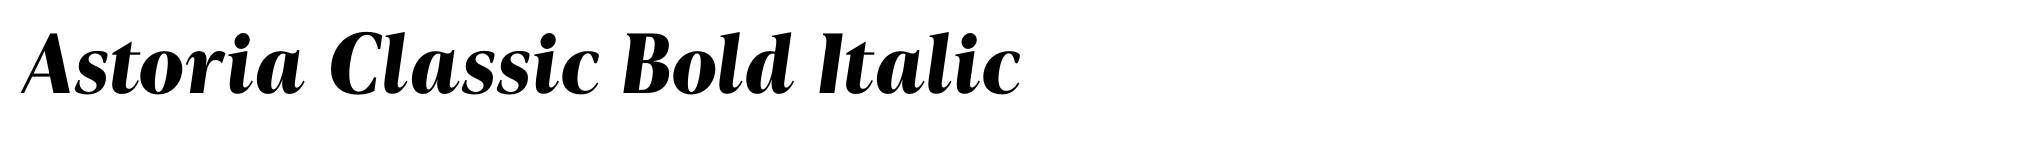 Astoria Classic Bold Italic image